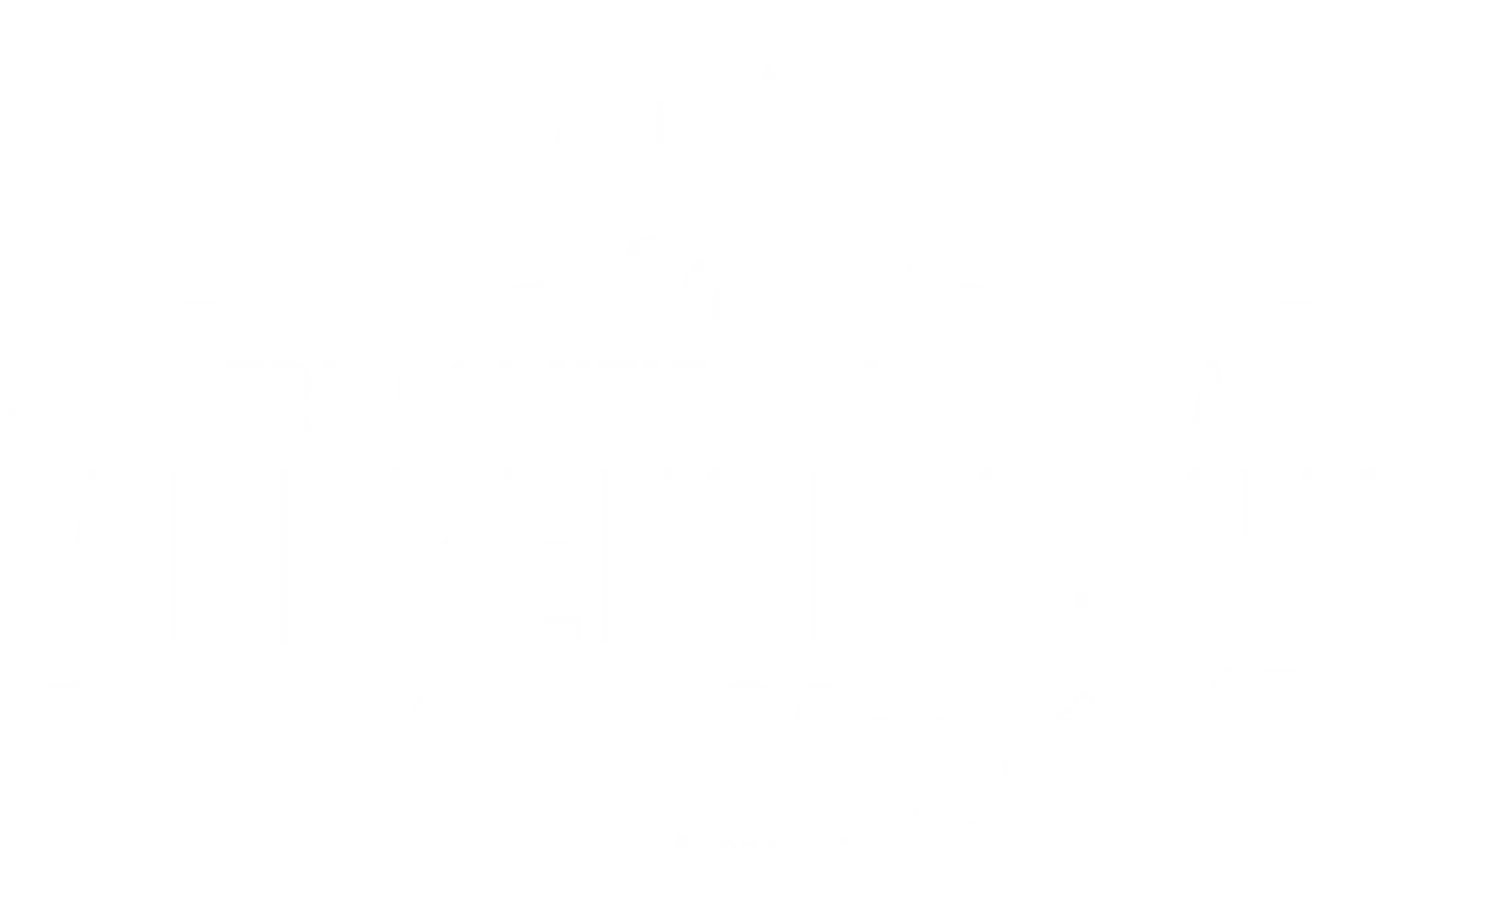 tri-counties_sheet_metal_apprenticeship_logo